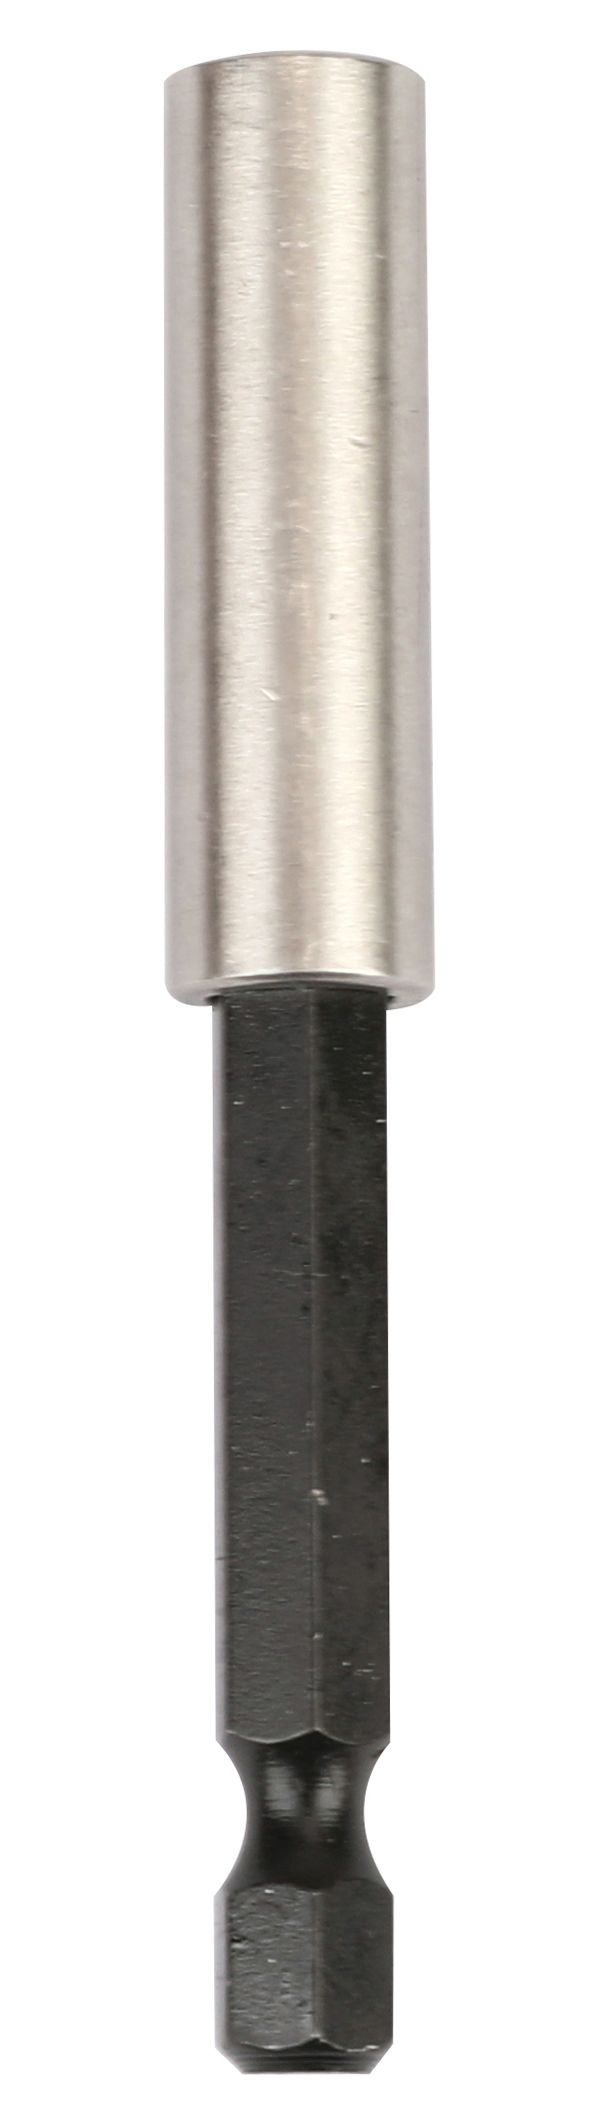 Wickes Magnetic Screwdriver Bit Holder 75mm